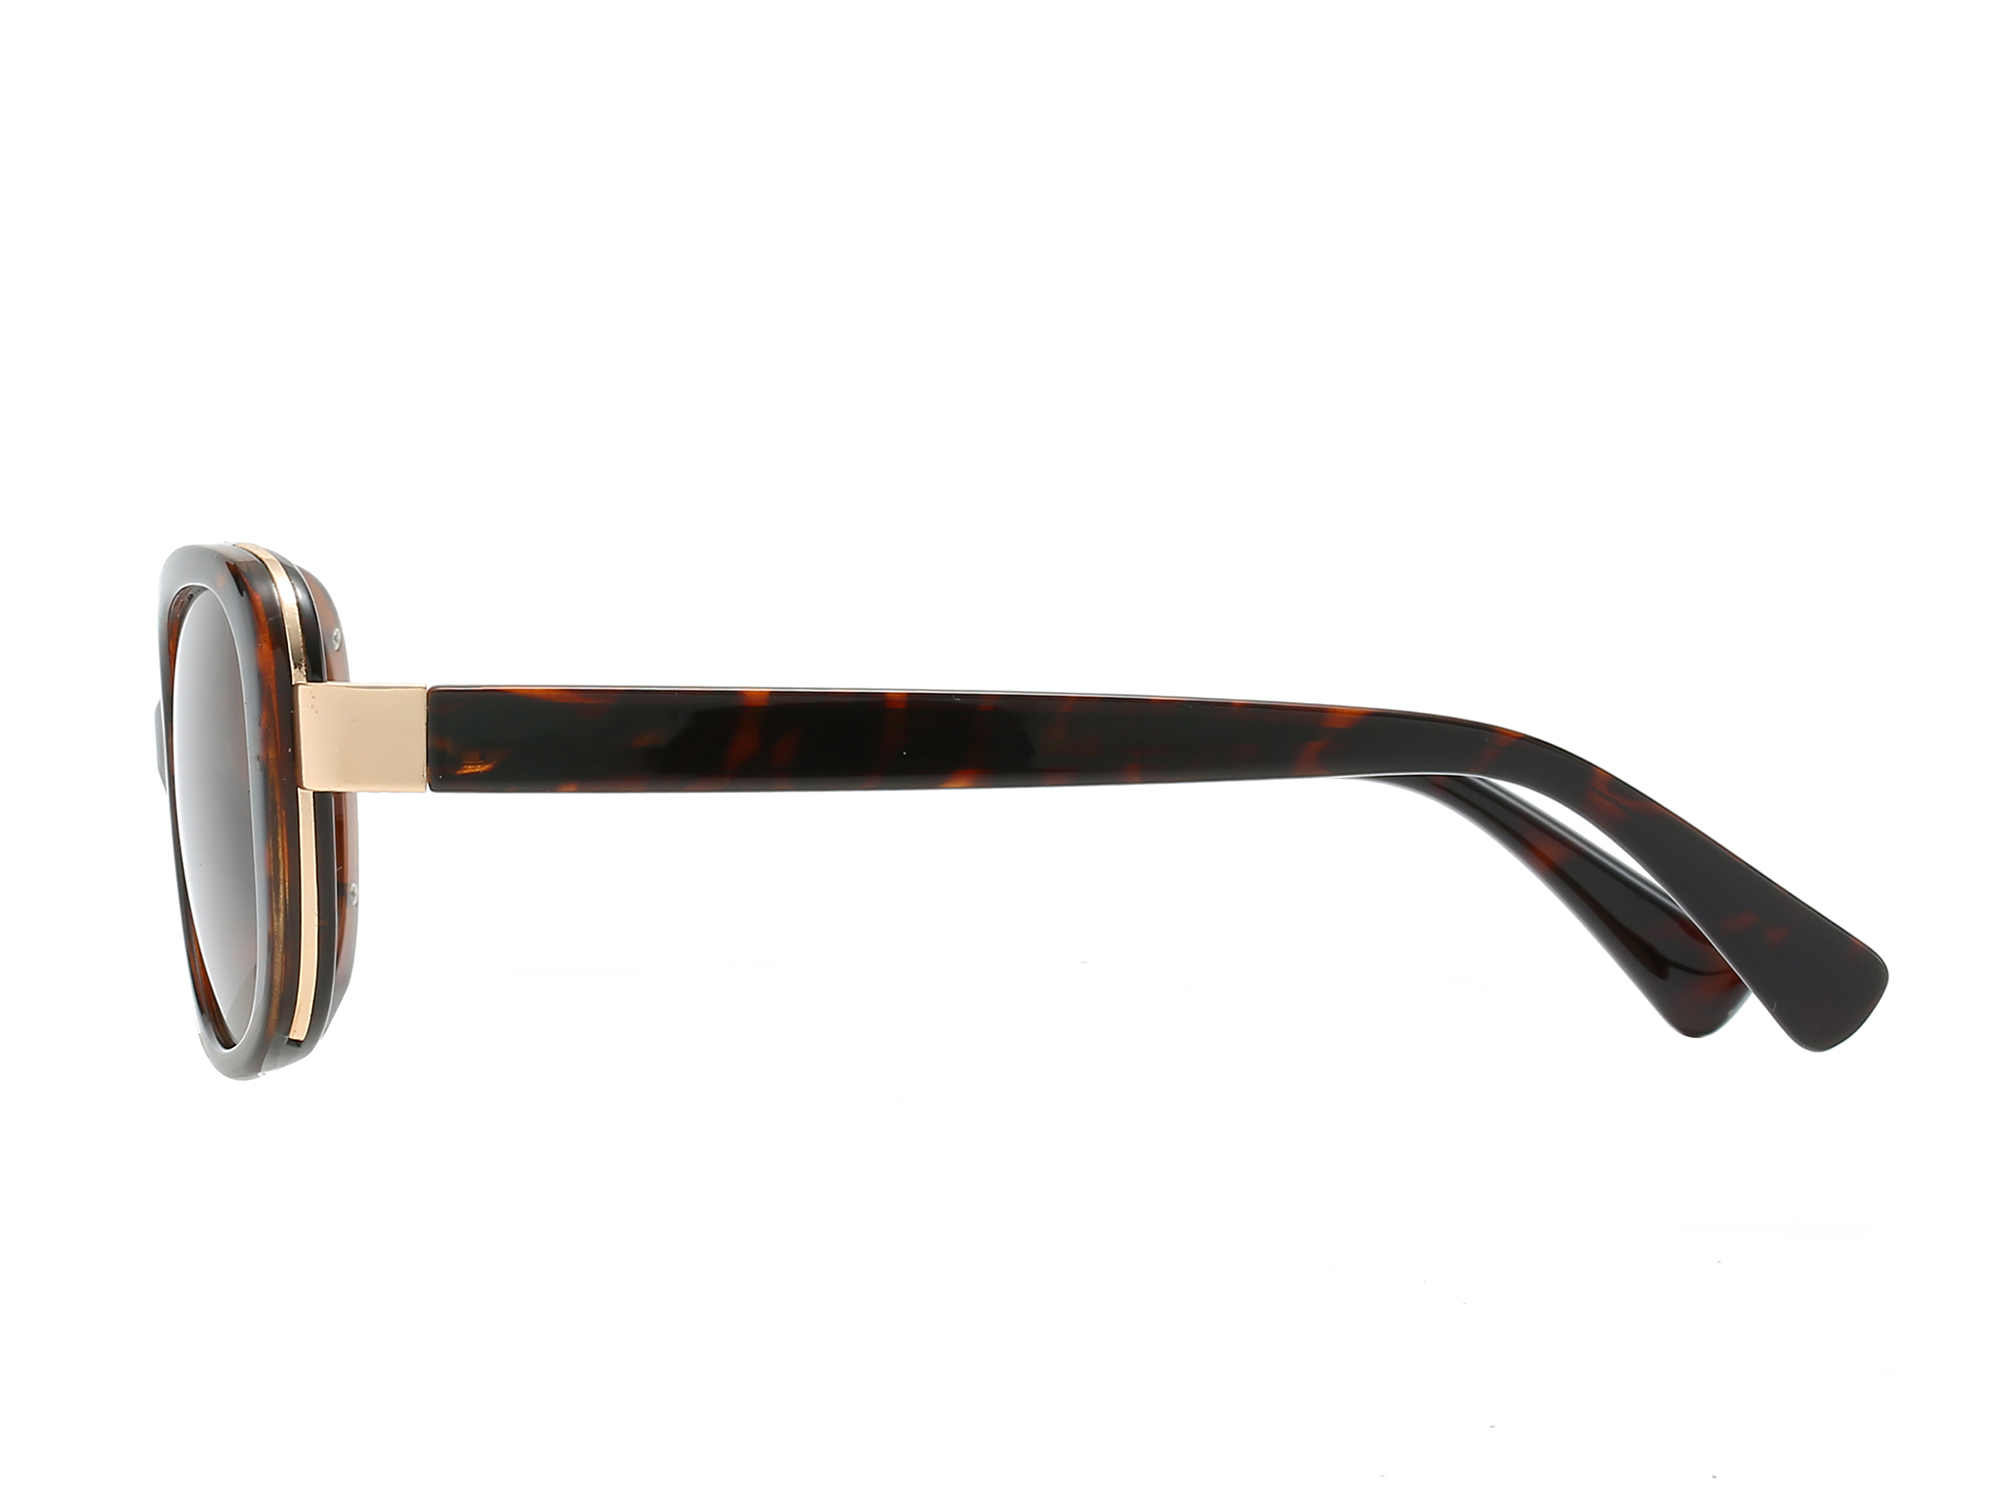 Piranha Women's "Diva" Tortoiseshell Crystal Frame Polarized Sunglasses with Brown Lens - image 2 of 2